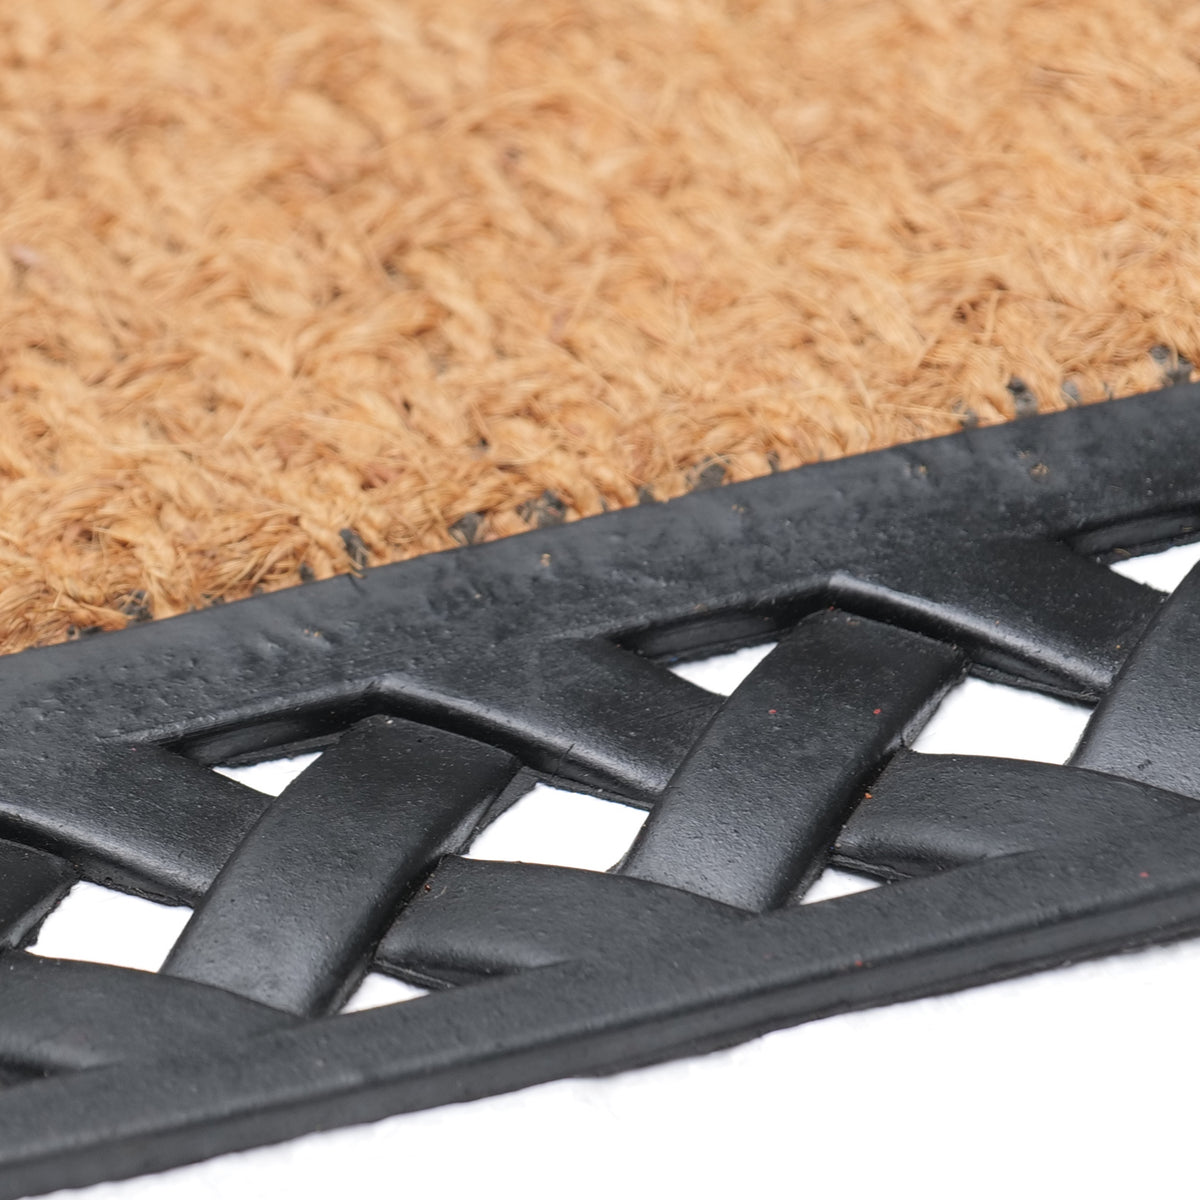 Plain Natural Coir Doormat with Black Rubber Border - OnlyMat